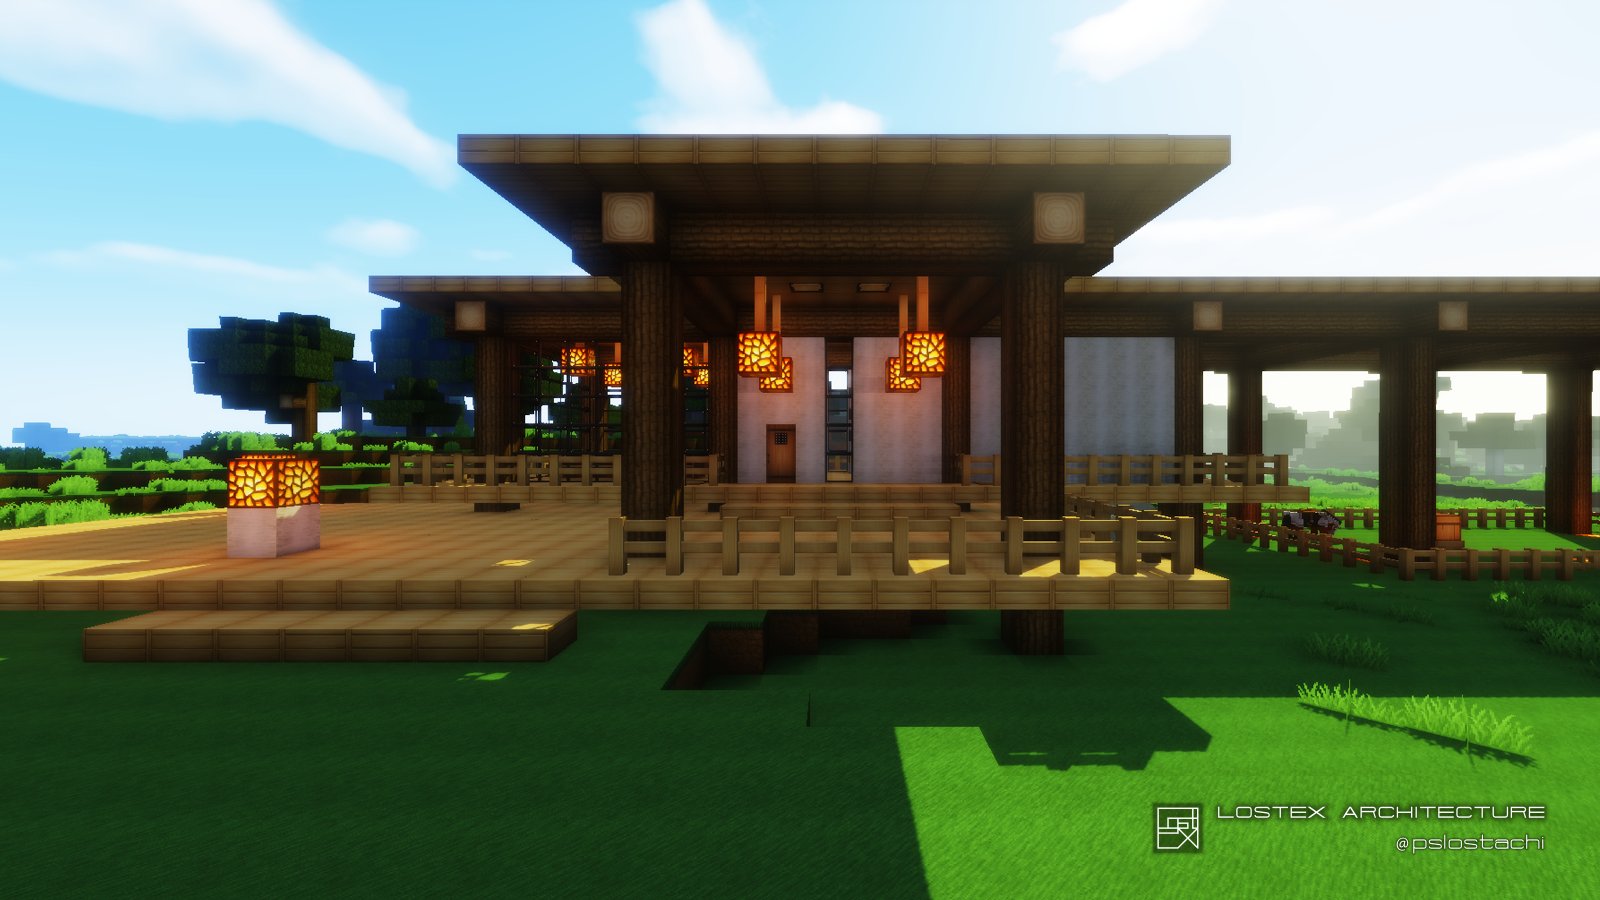 Aoi Sur Twitter サバイバルに最適 木材とガラスだけで出来る無限に増築可能なローコスト住宅 反響があれば作り方の公開検討 Minecraft建築部 Minecraft建築コミュ マインクラフト建築コミュ T Co Toof4x79fl Twitter